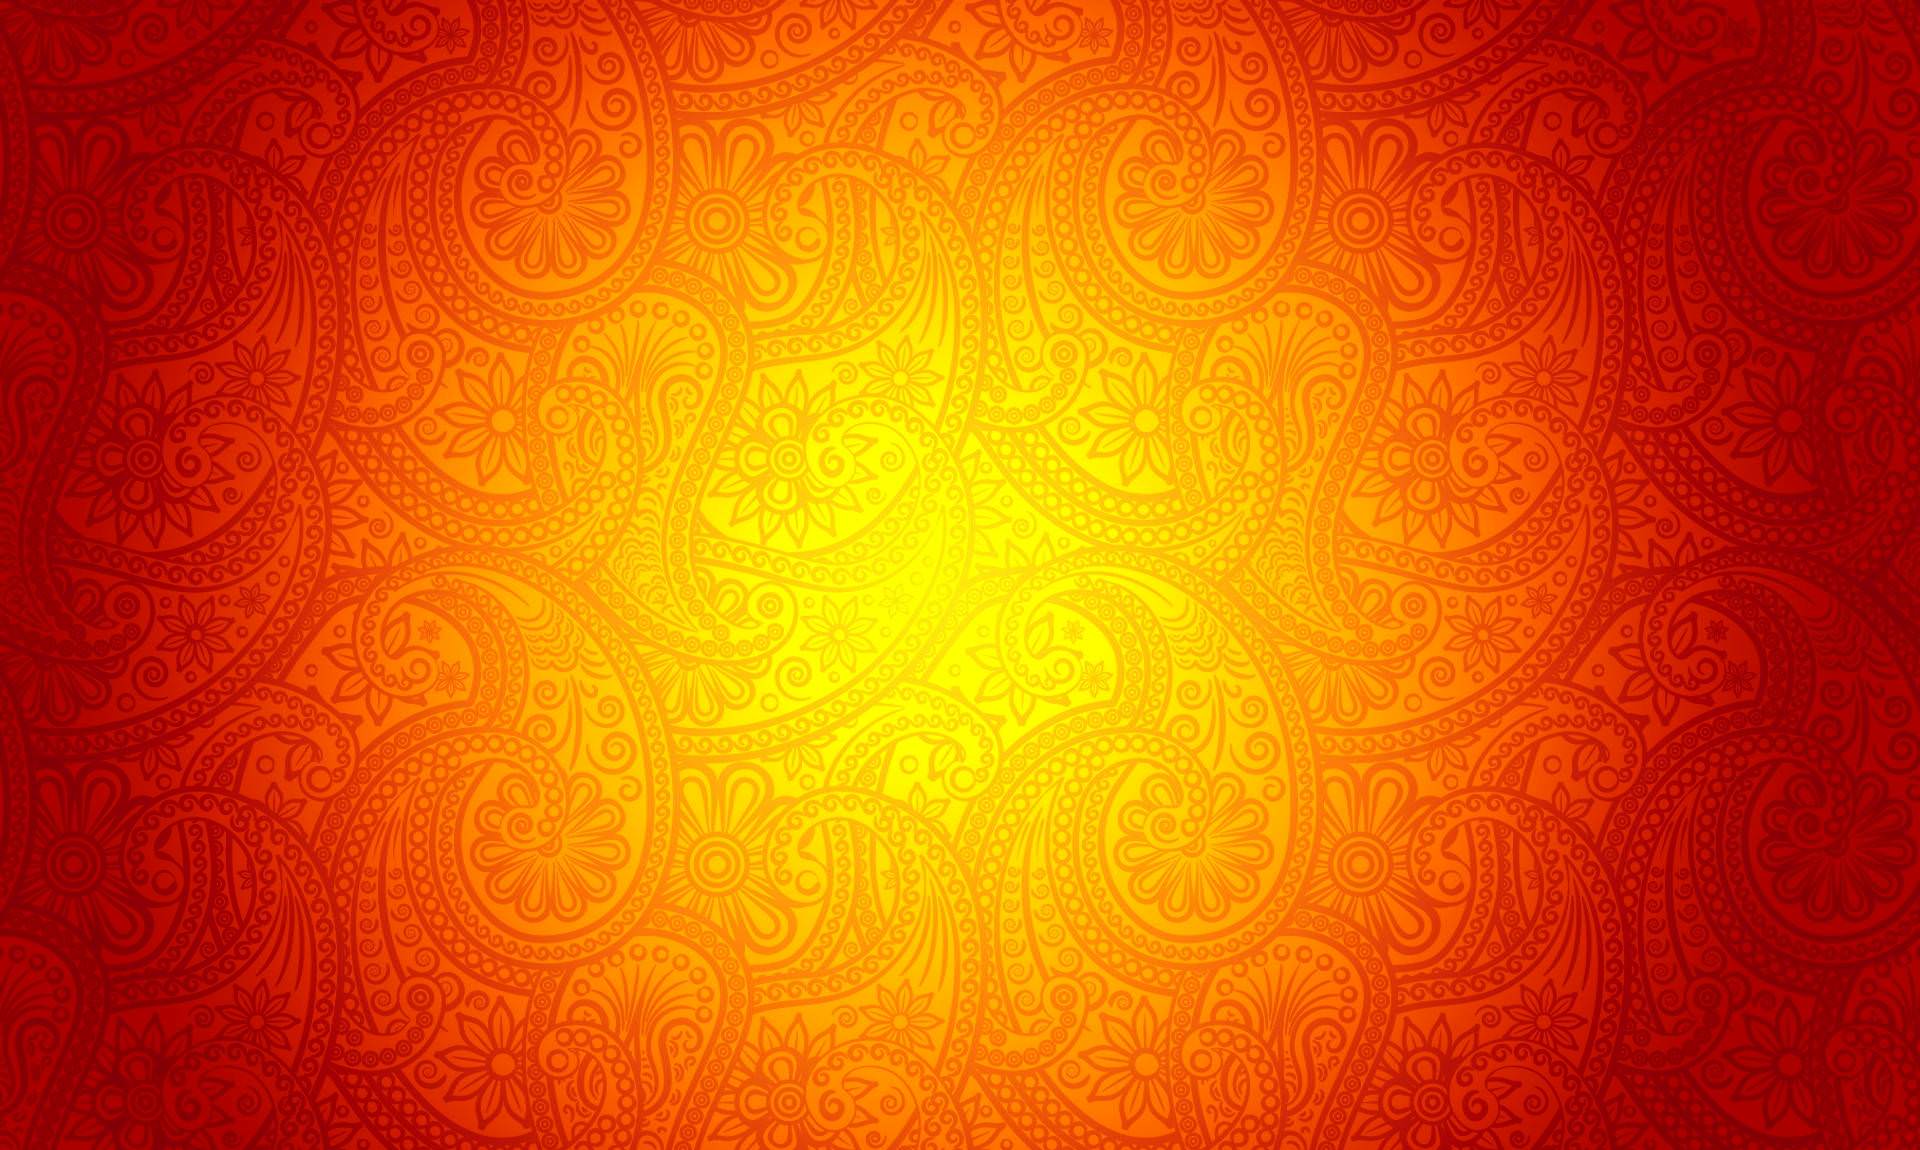 Orange Background With Ornamental Patterns. Manarat Al Tibyan